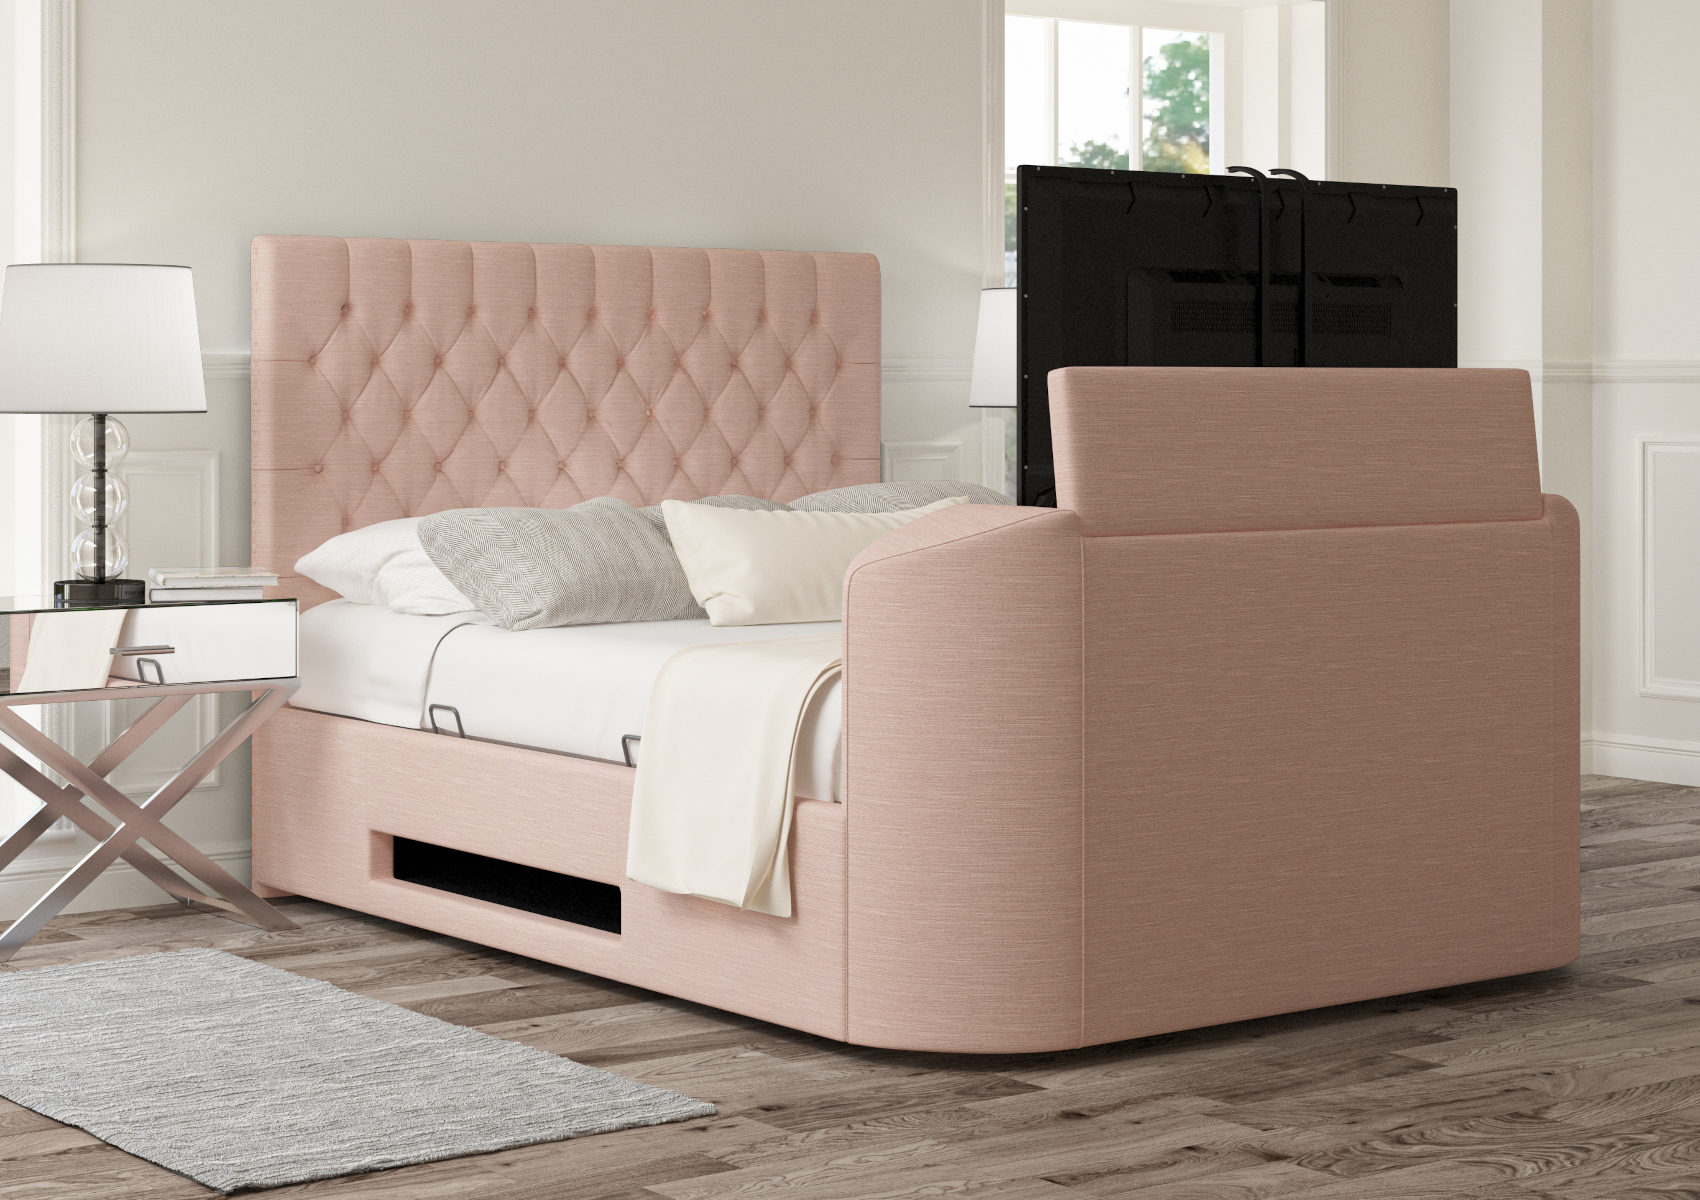 View Claridge Linea Powder Upholstered Double Multifunctional Ottoman Smart TV Bed Time4Sleep information